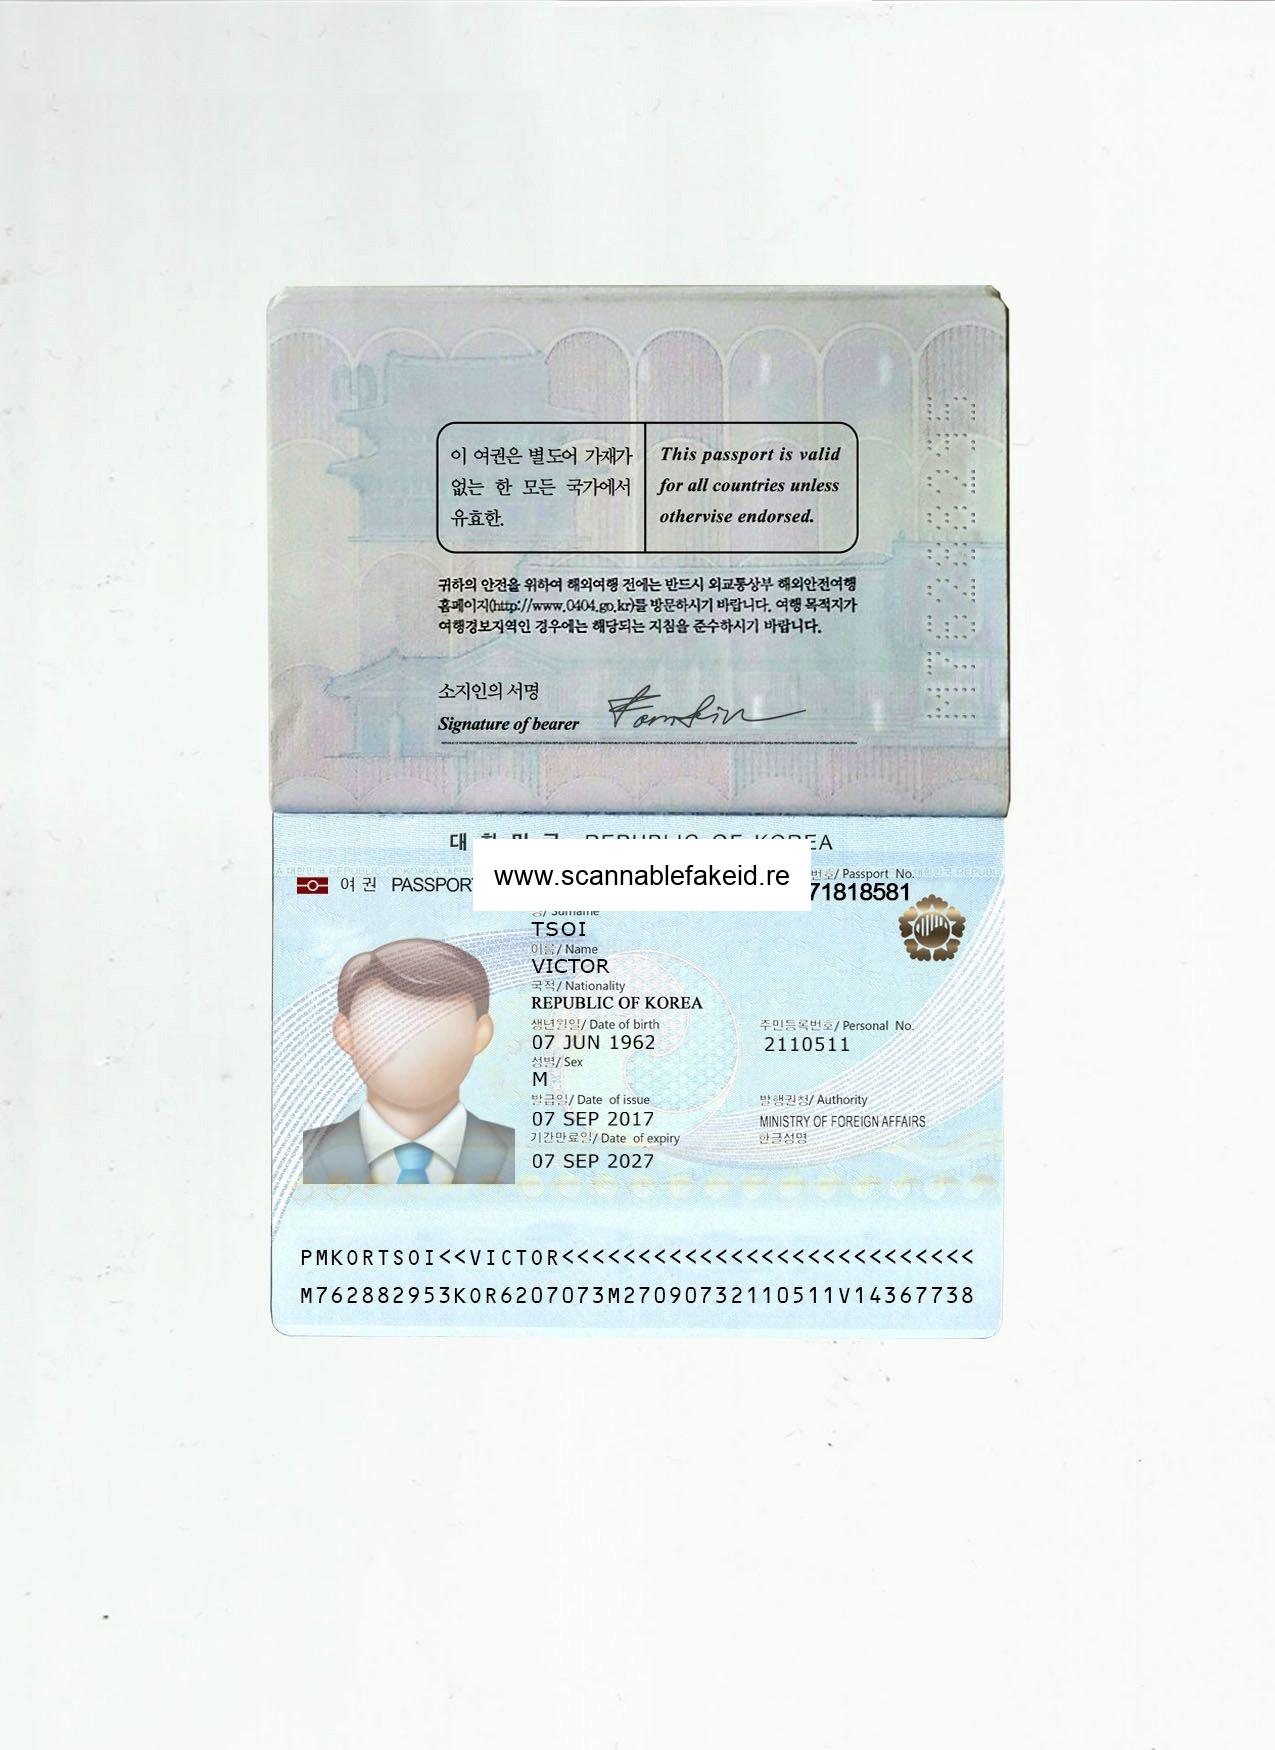 Dominica Fake Passport - Buy Scannable Fake Id Online - Fake ID Website